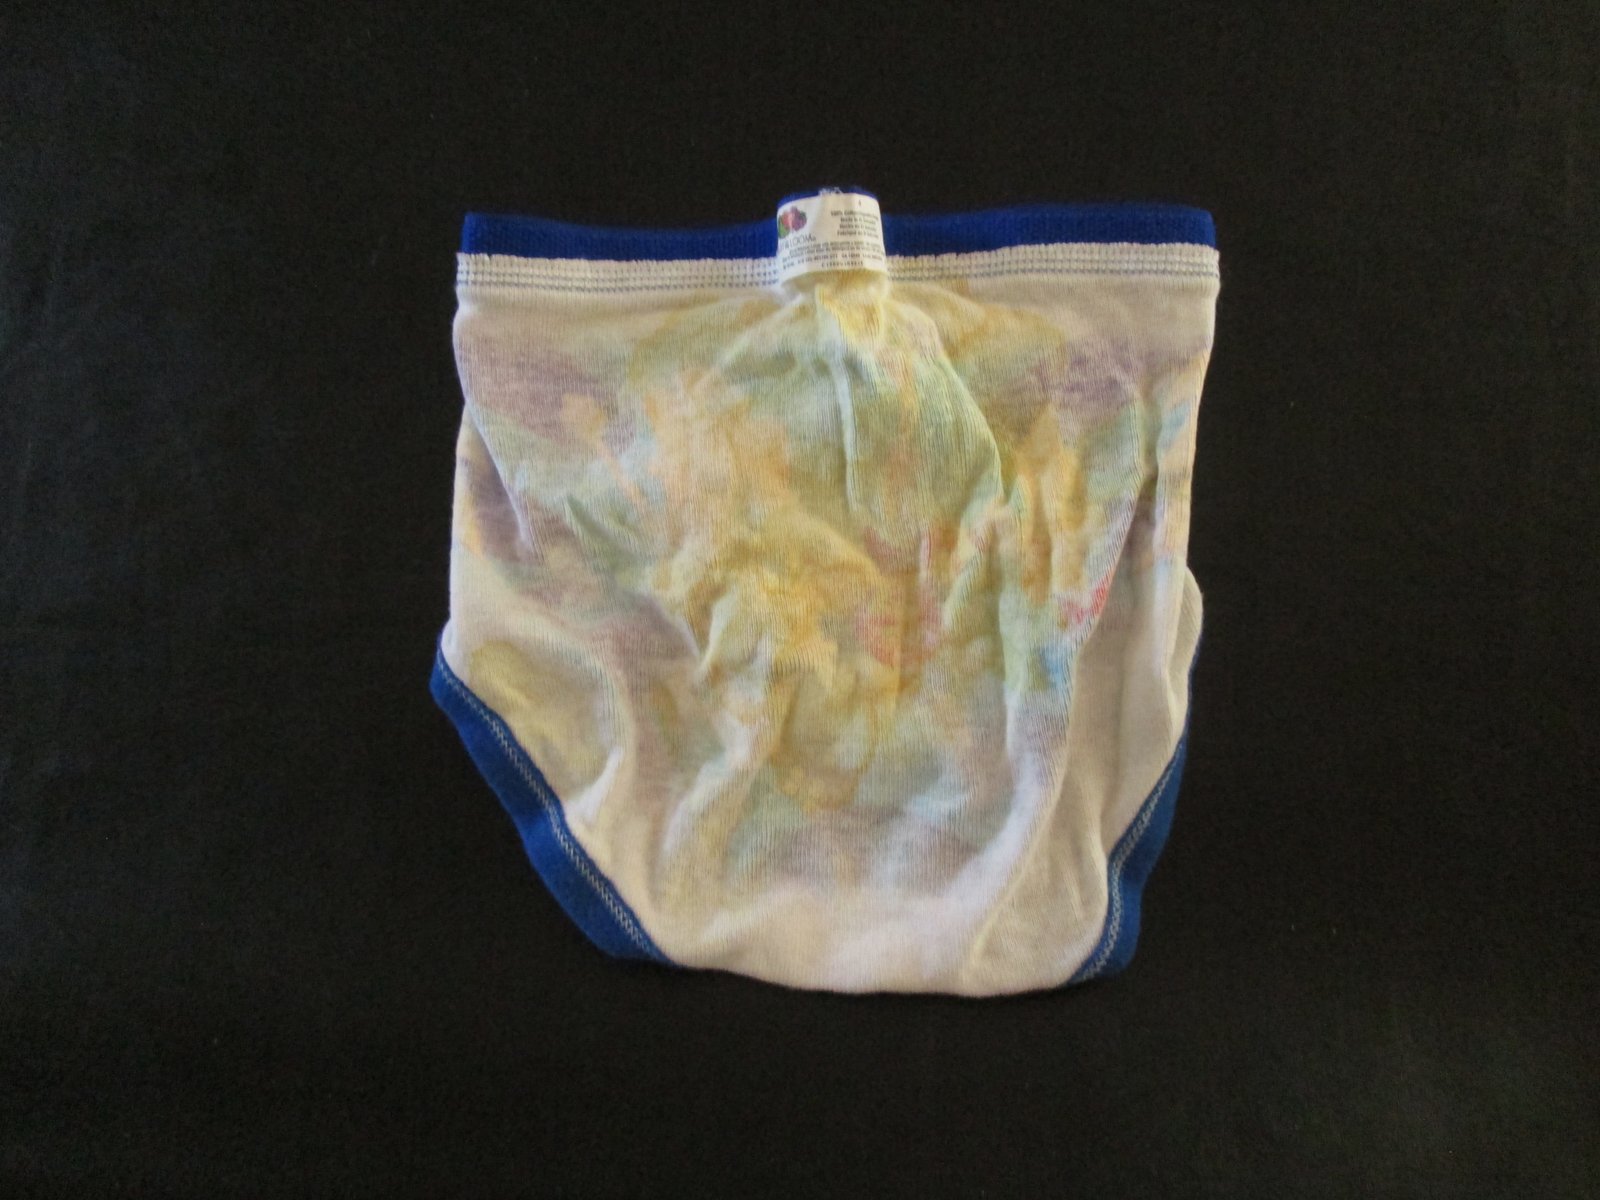 Boys dirty underwear (used and unwashed undies) / lkcqq9jj.jpg